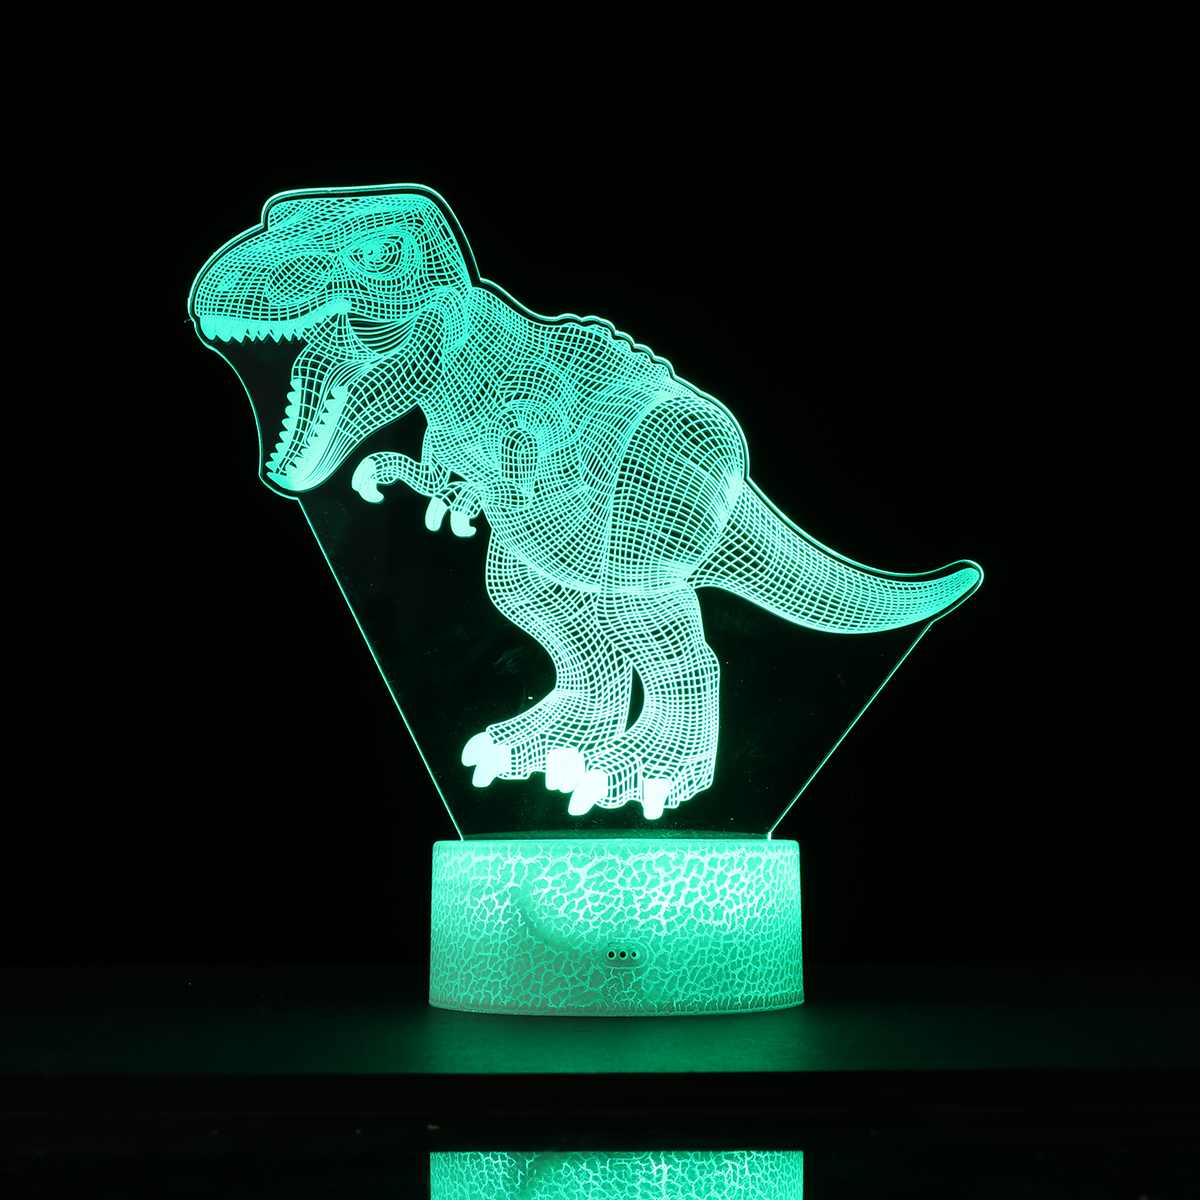 USBBattery-Powered-3D-Children-Kids-Night-Light-Lamp-Dinosaur-Toys-Boys-16-Colors-Changing-LED-Remot-1772096-2